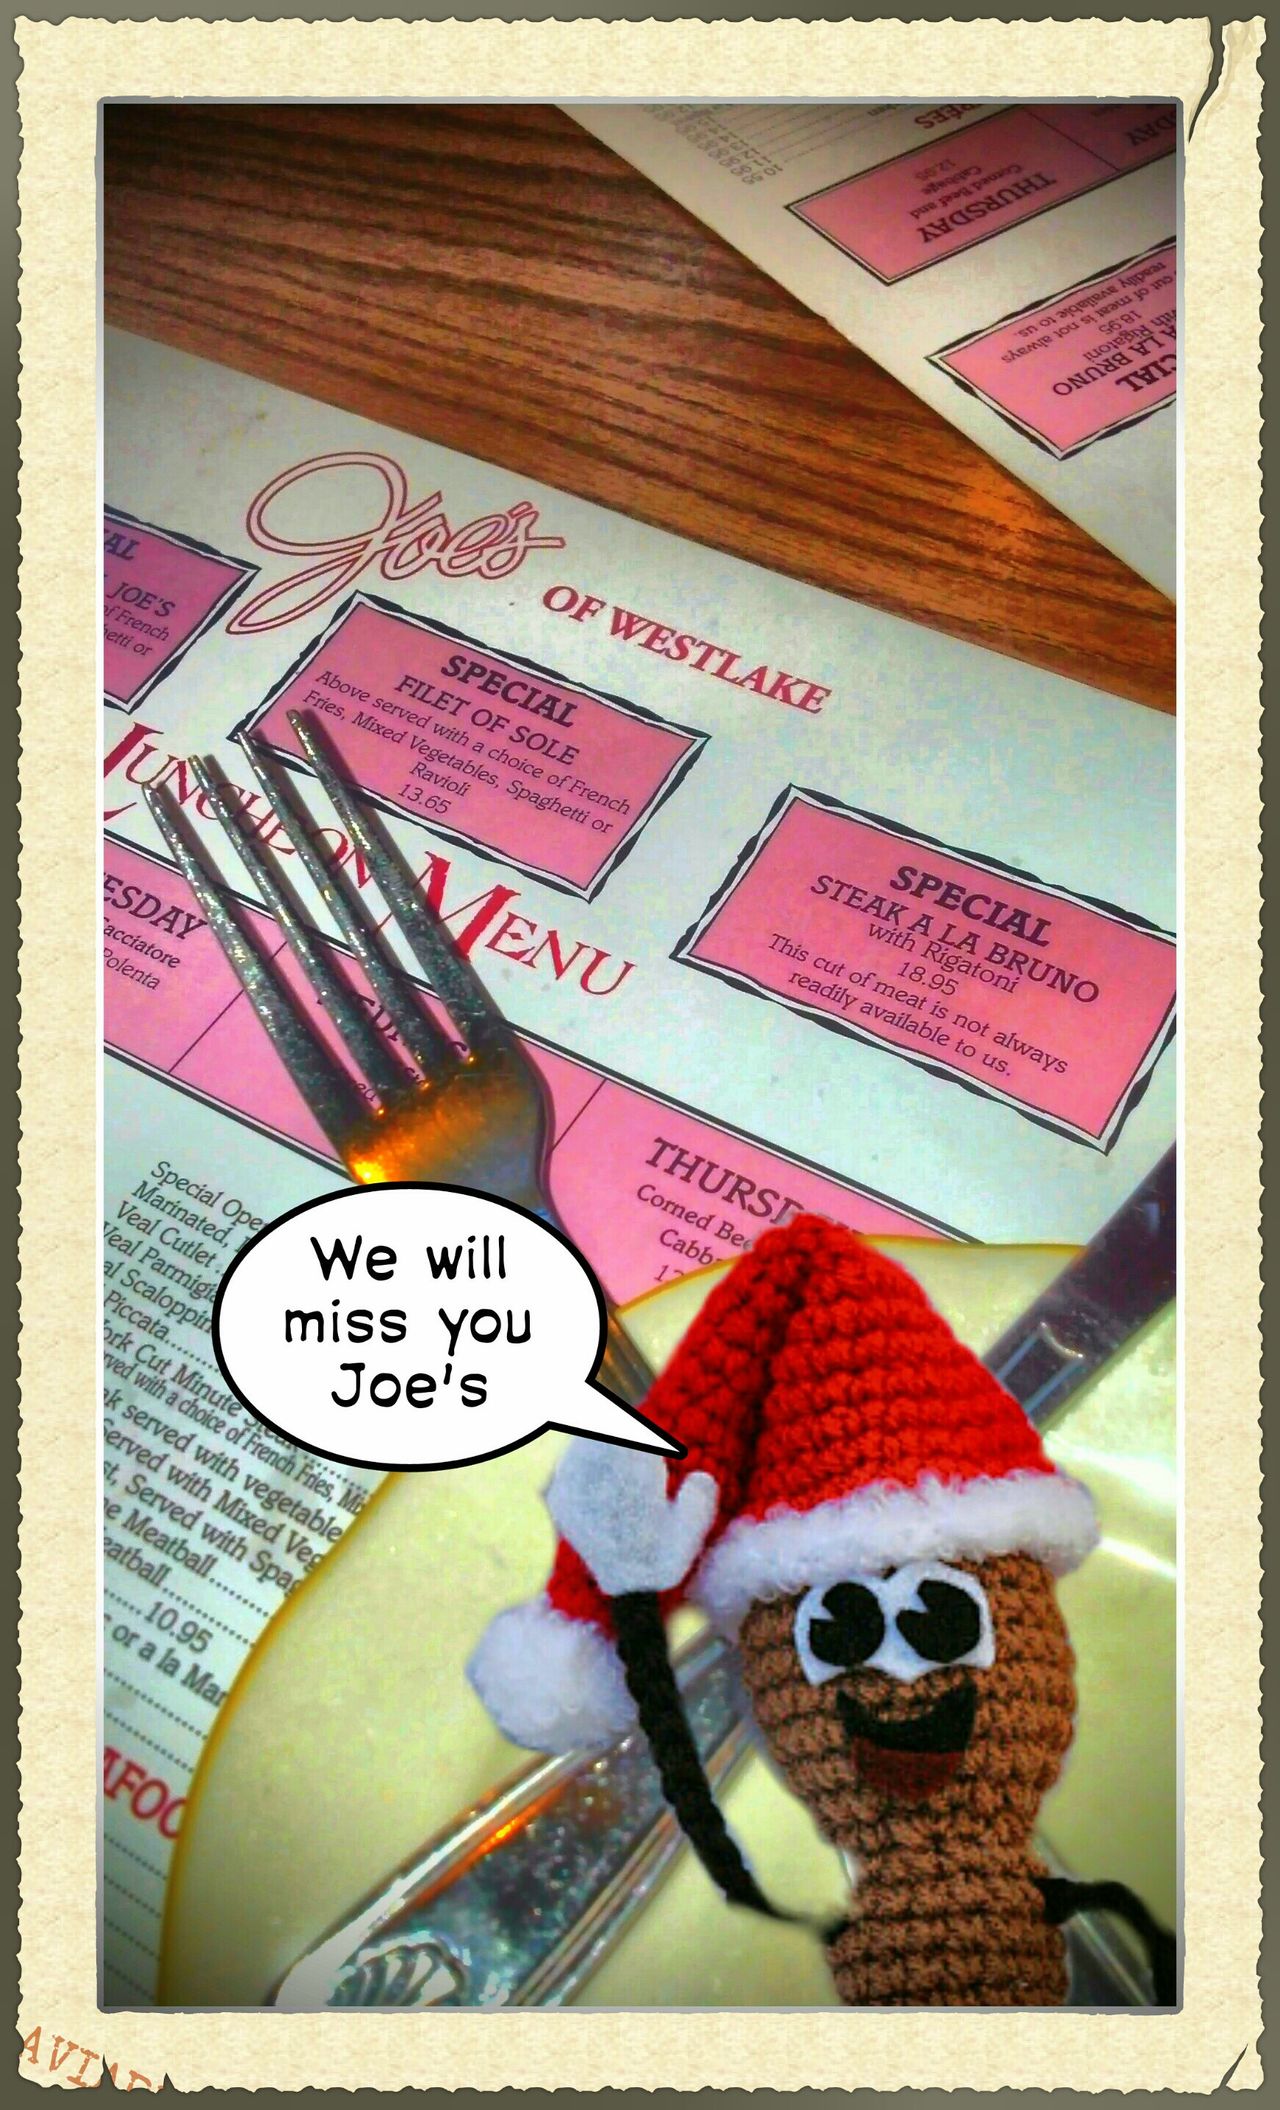 Joe's of Westlake